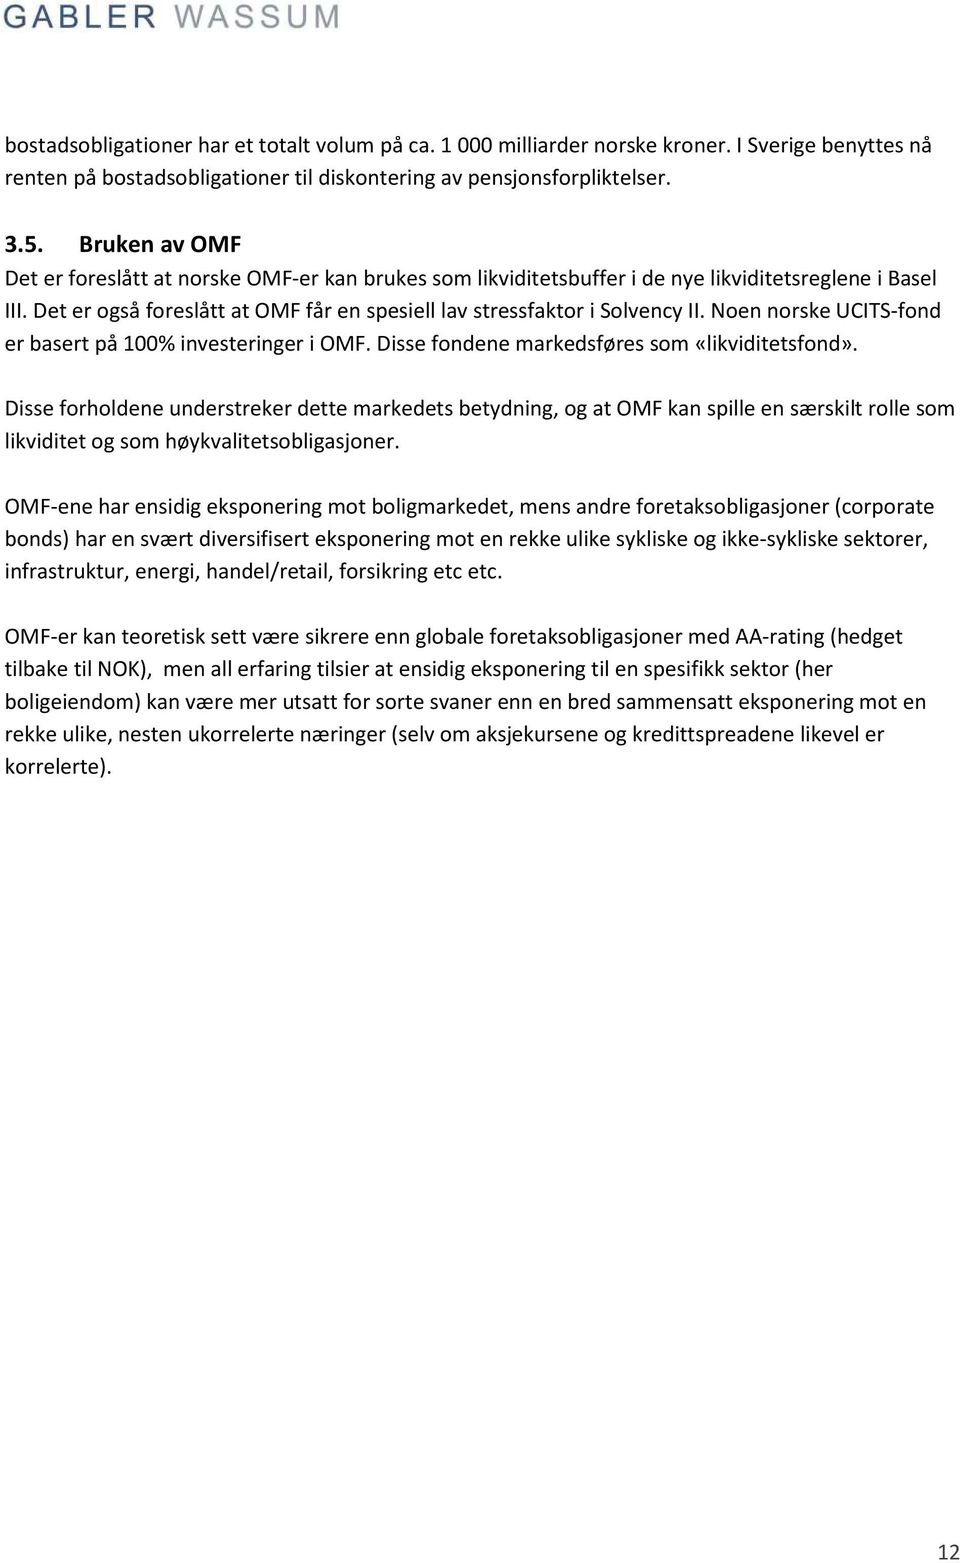 Noen norske UCITS-fond er basert på 100% investeringer i OMF. Disse fondene markedsføres som «likviditetsfond».